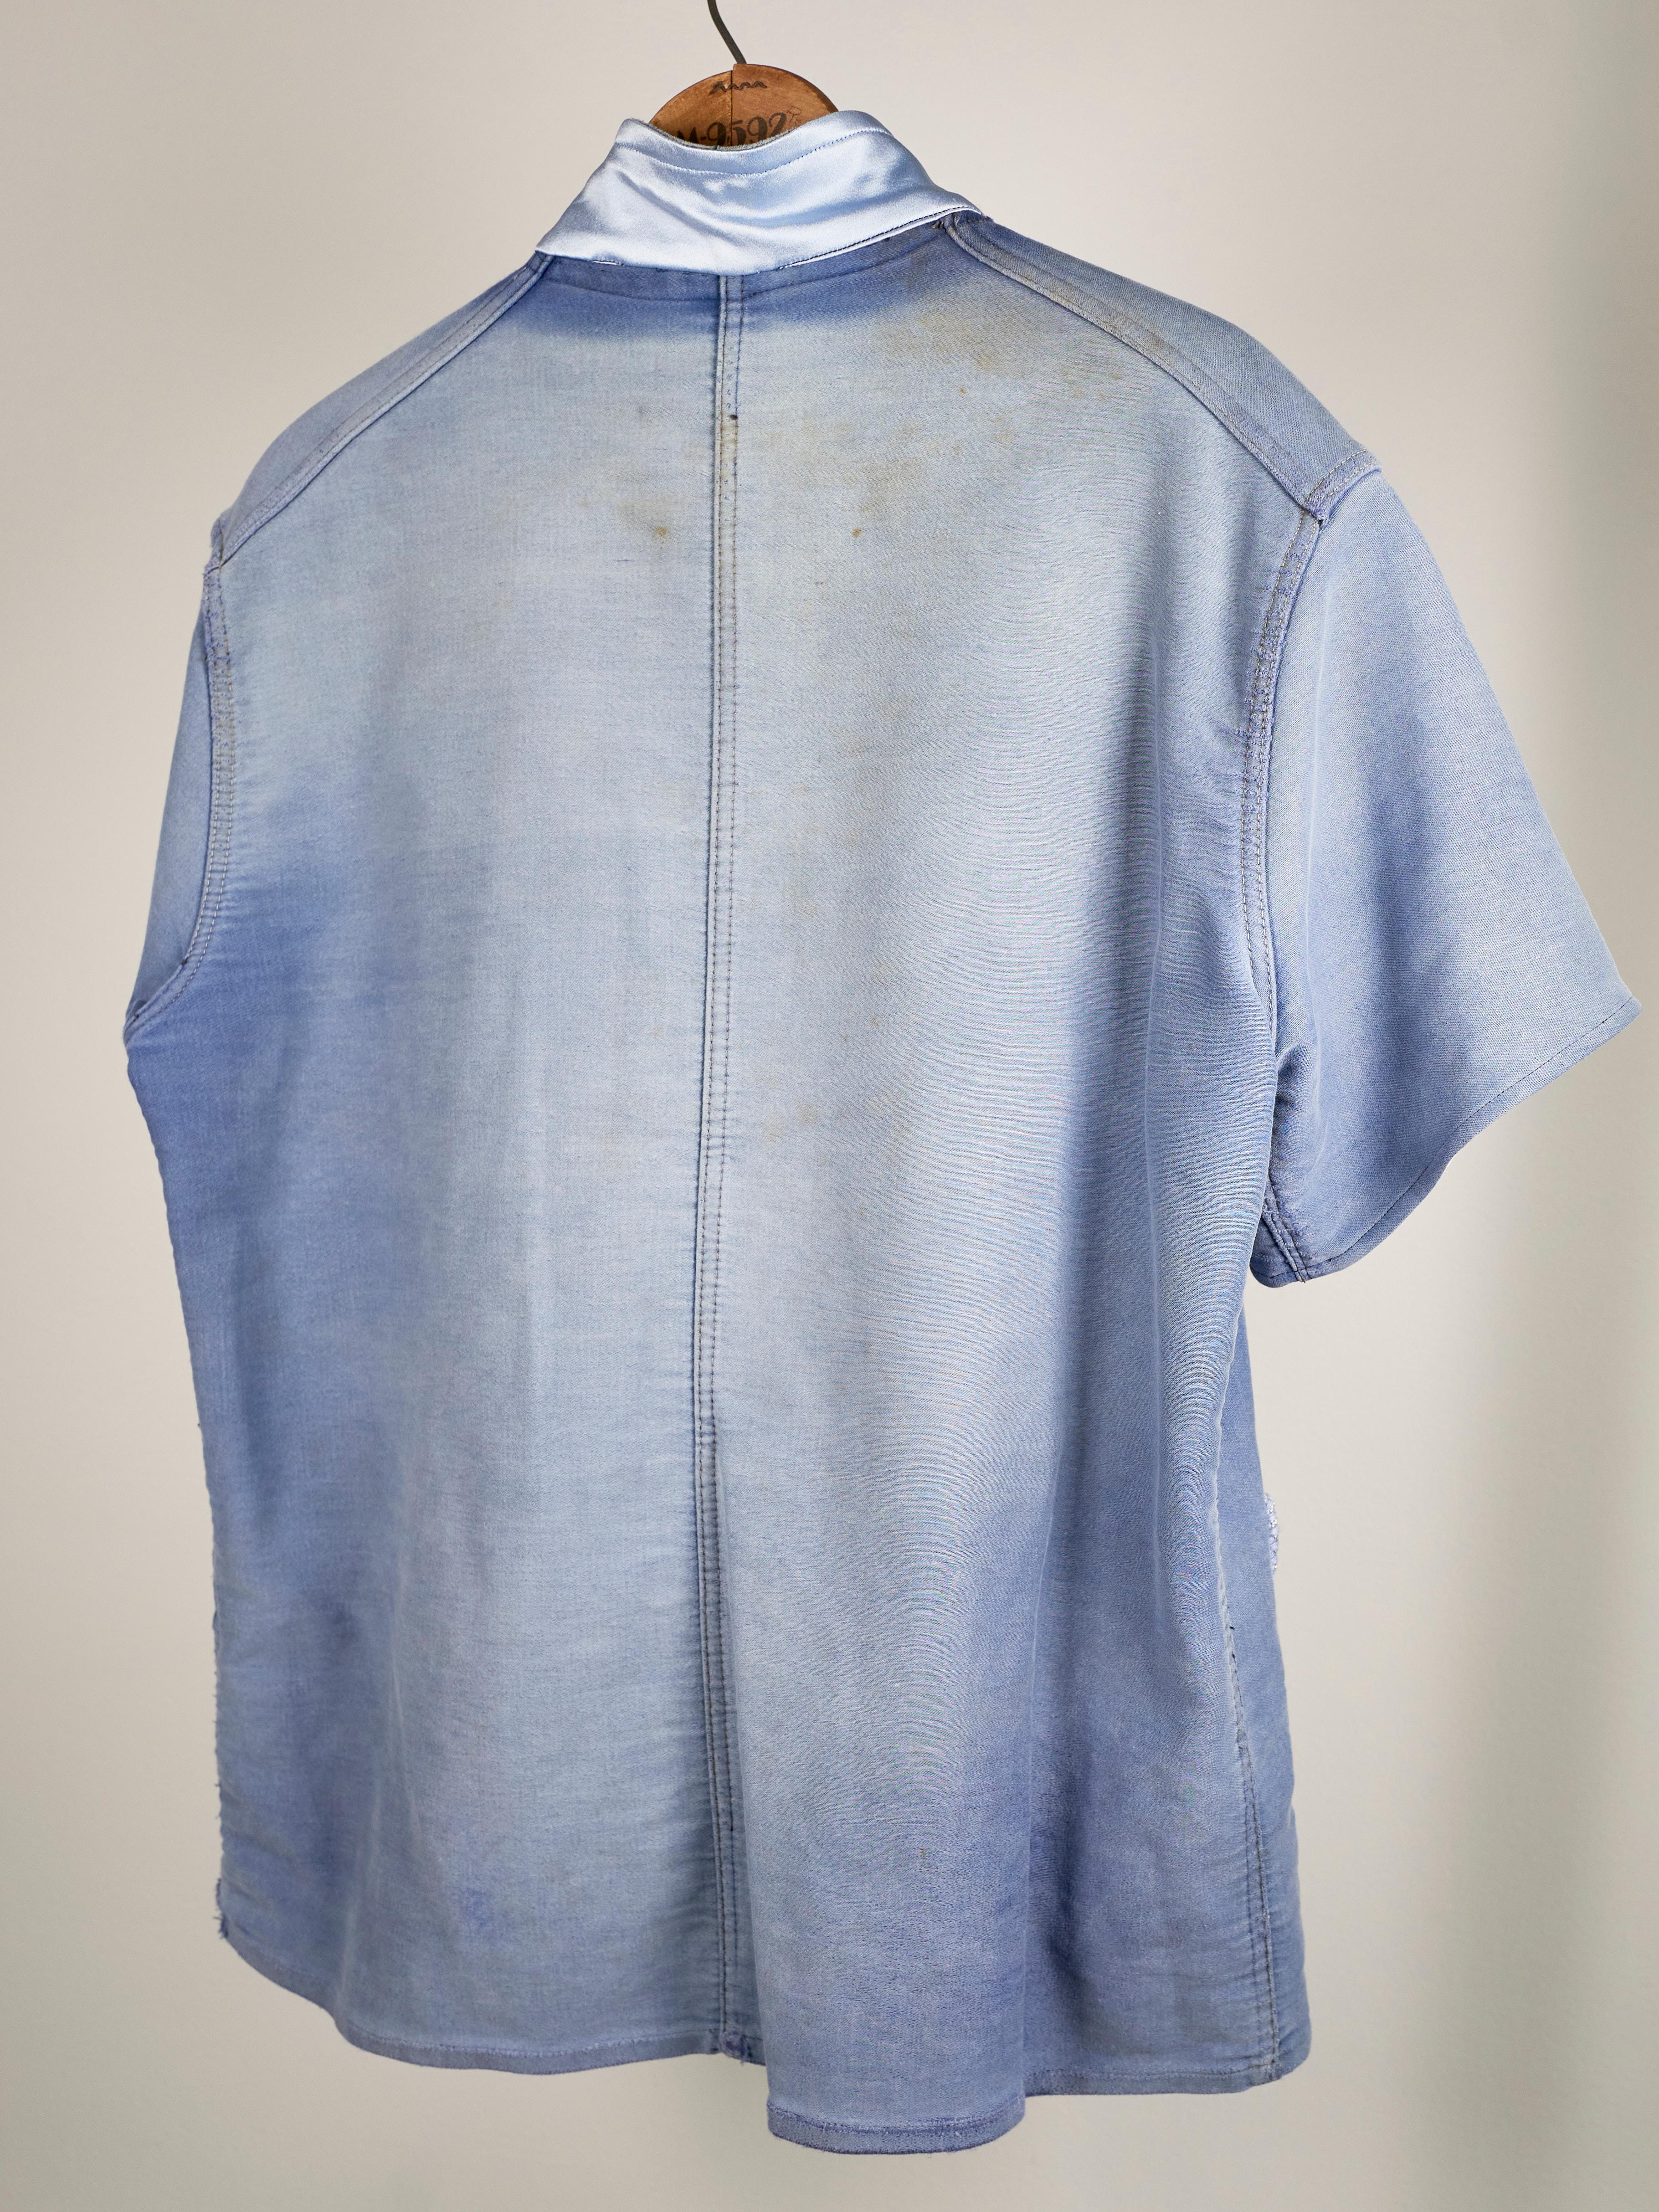 Short Sleeve Jacket Light Blue Work Wear Distressed Tweed J Dauphin  For Sale 5